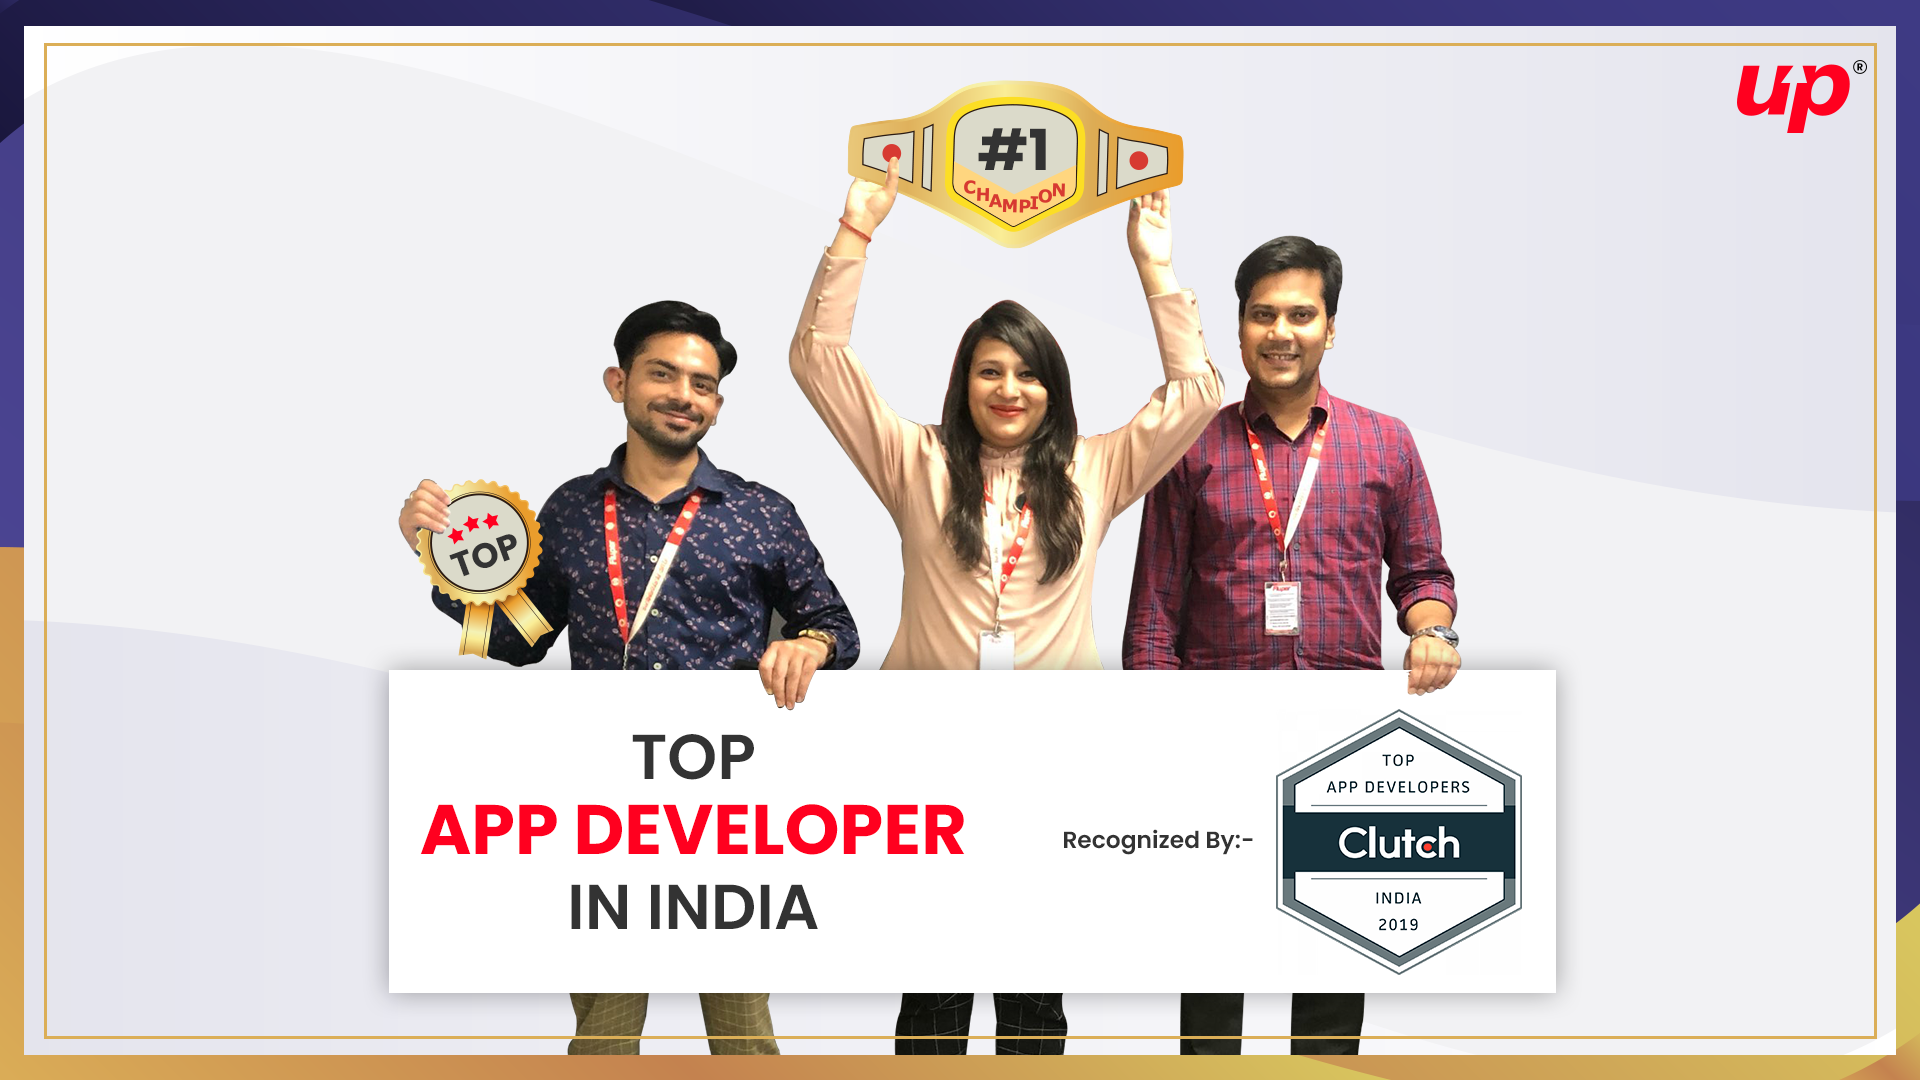 Fluper as Top App Developer by Clutch